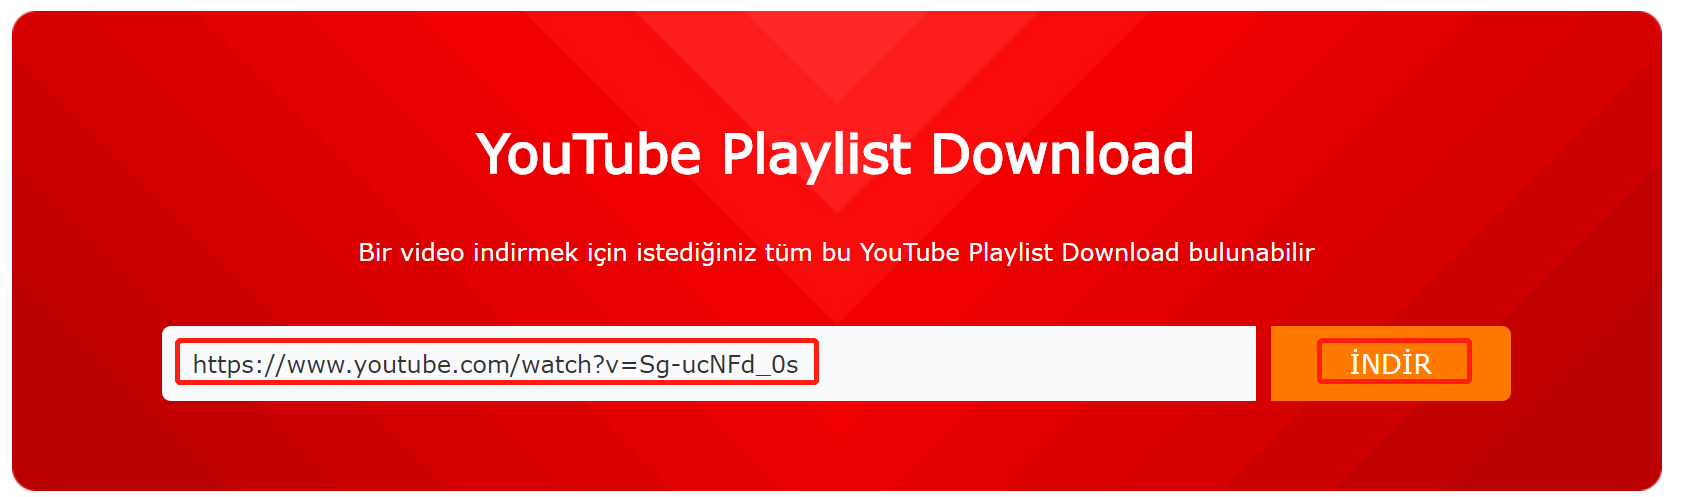 youtube-playlist-downloader